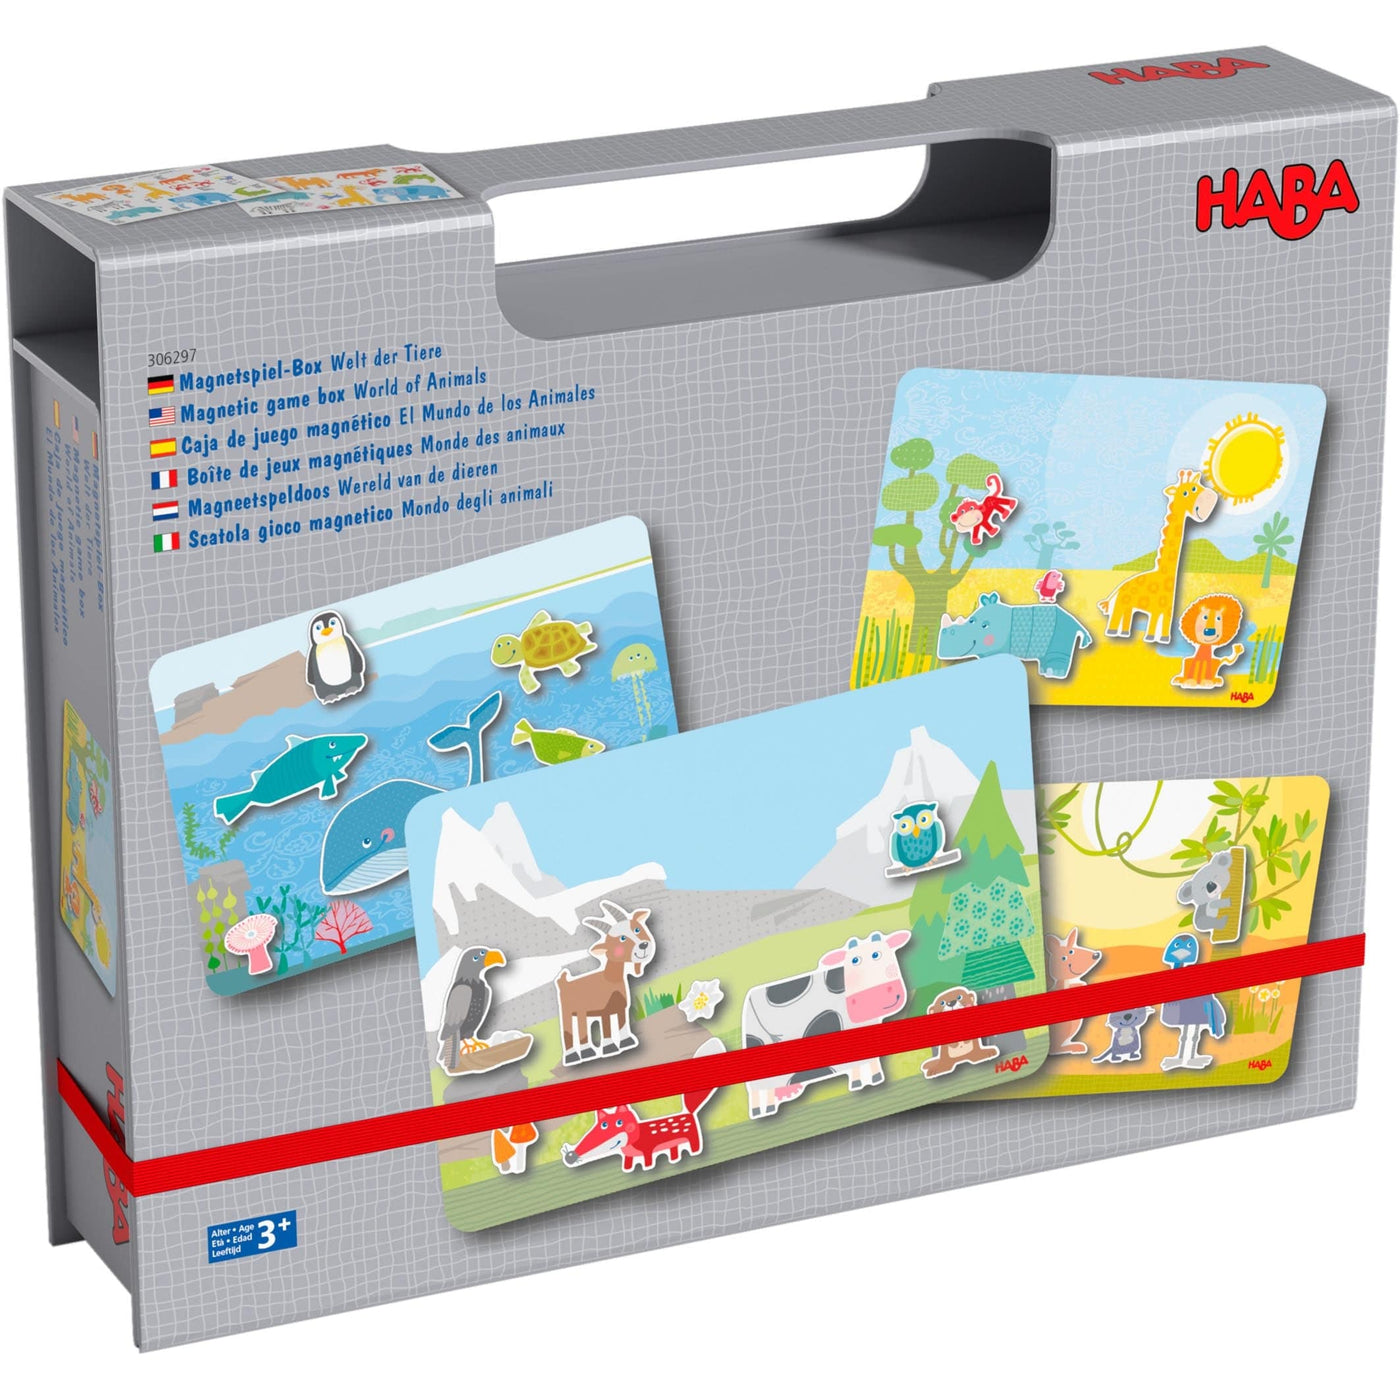 World of Animals Magnetic Game Box - HABA USA